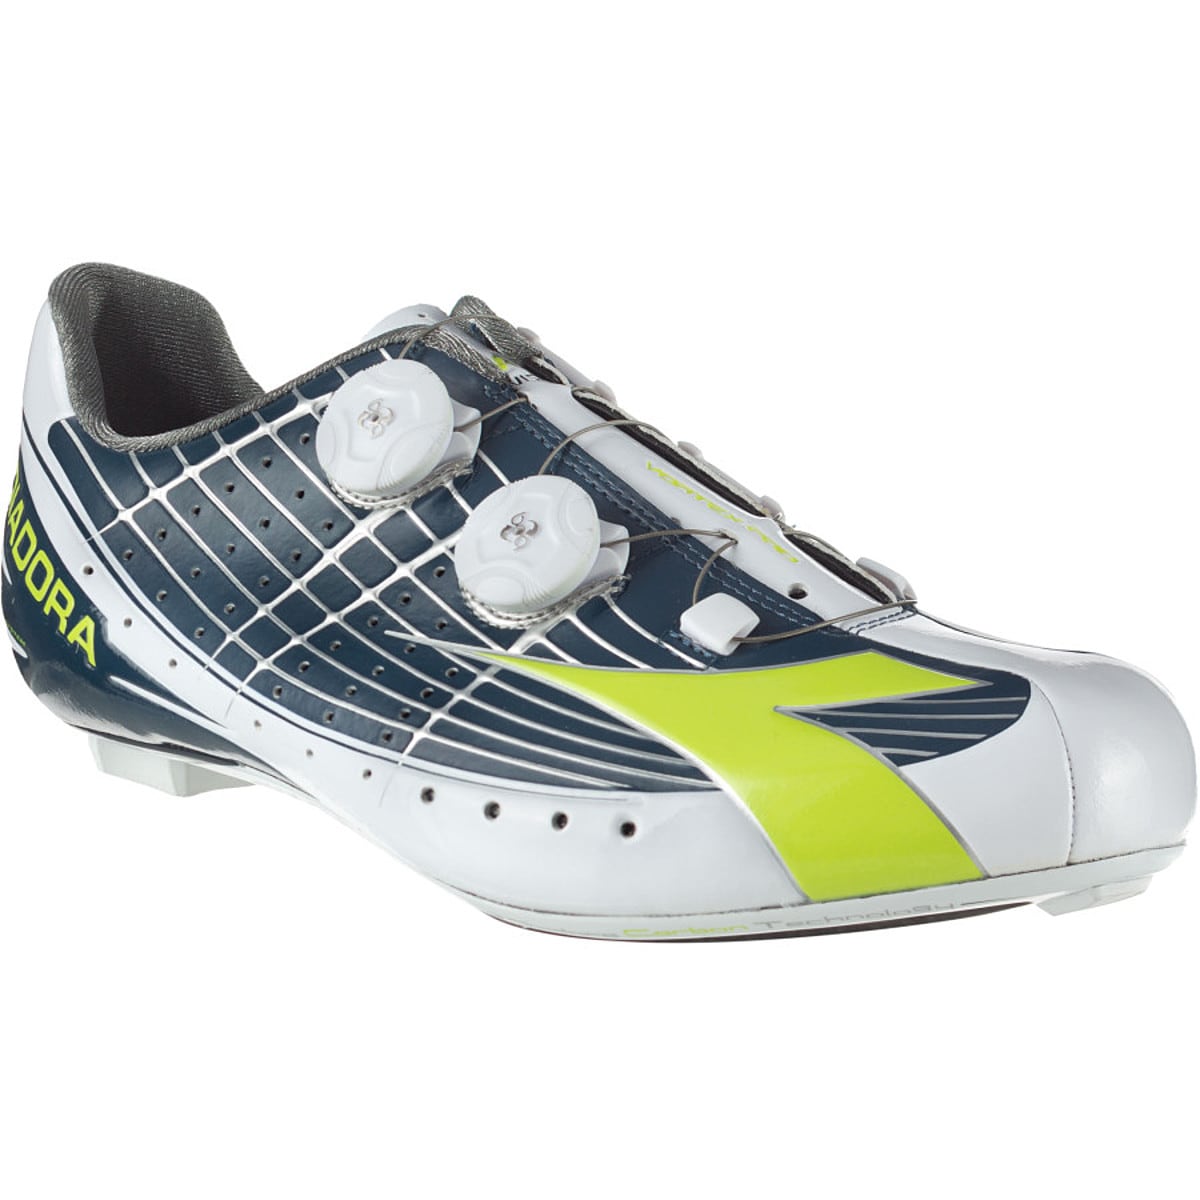 Diadora Vortex Pro Movistar Cycling Shoe Men's